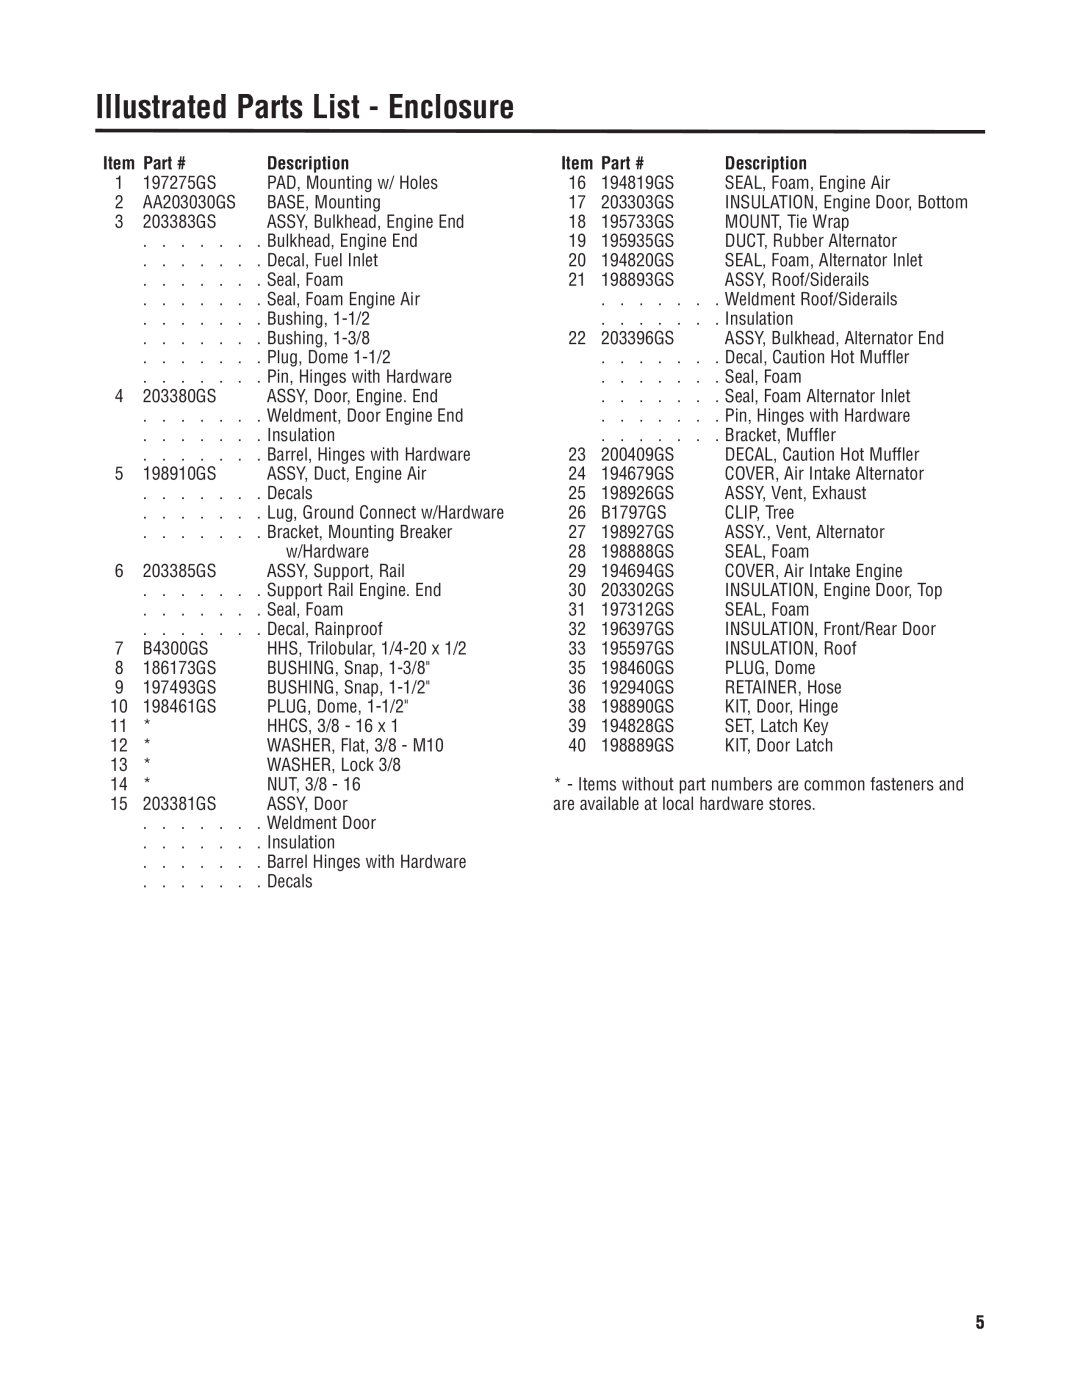 Briggs & Stratton 40275 manual Illustrated Parts List - Enclosure, Description 